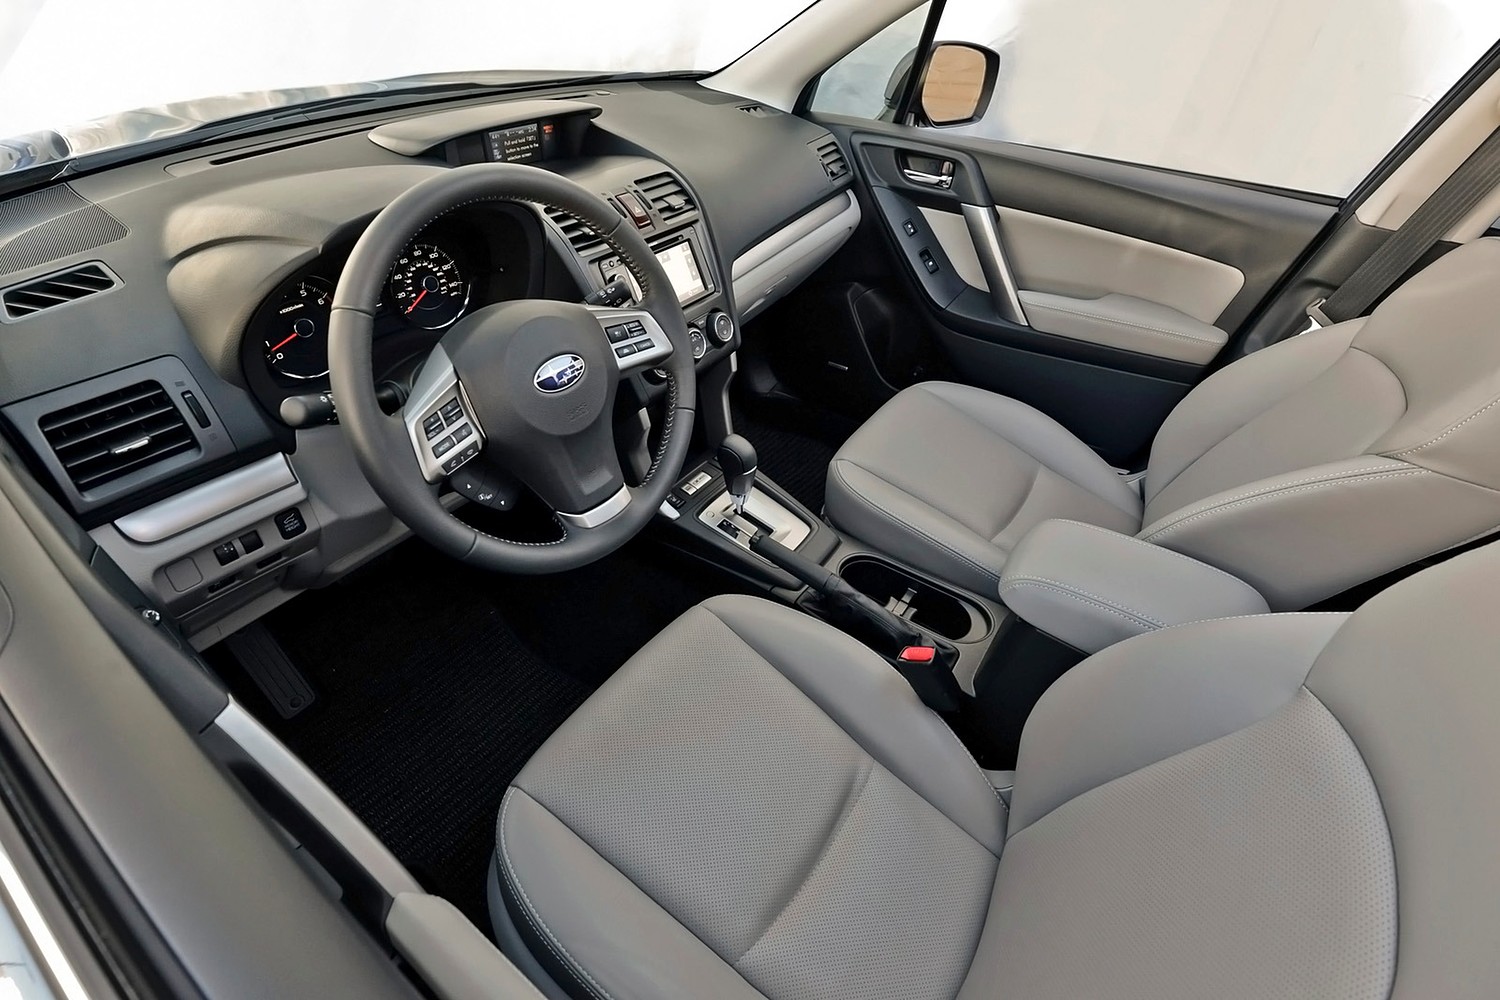 Subaru Forester 2.5i Limited PZEV 4dr SUV Interior (2015 model year shown)